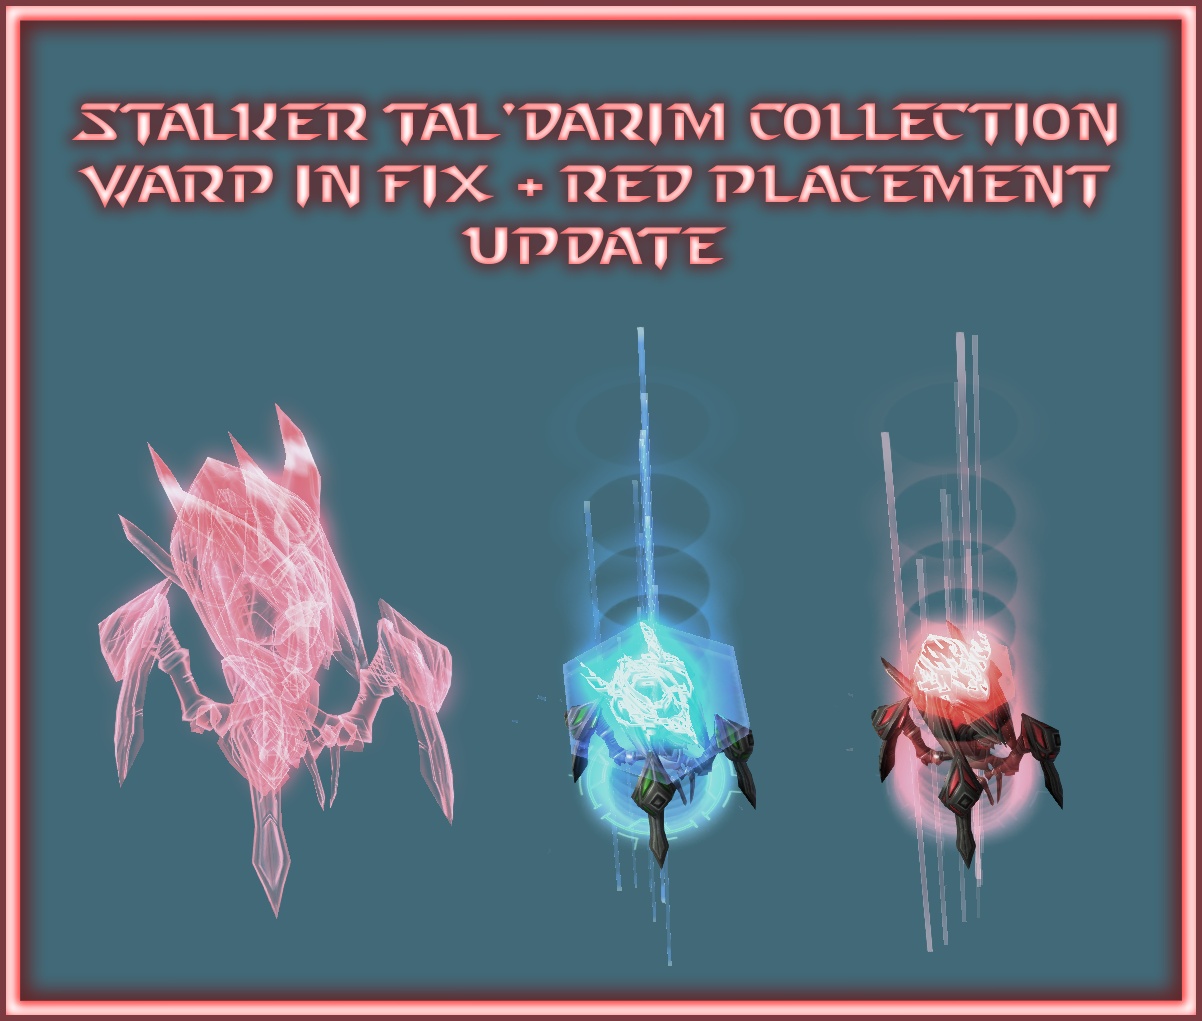 Stalker Tal'darim Collection - Warp In Fix + Red Placement Update